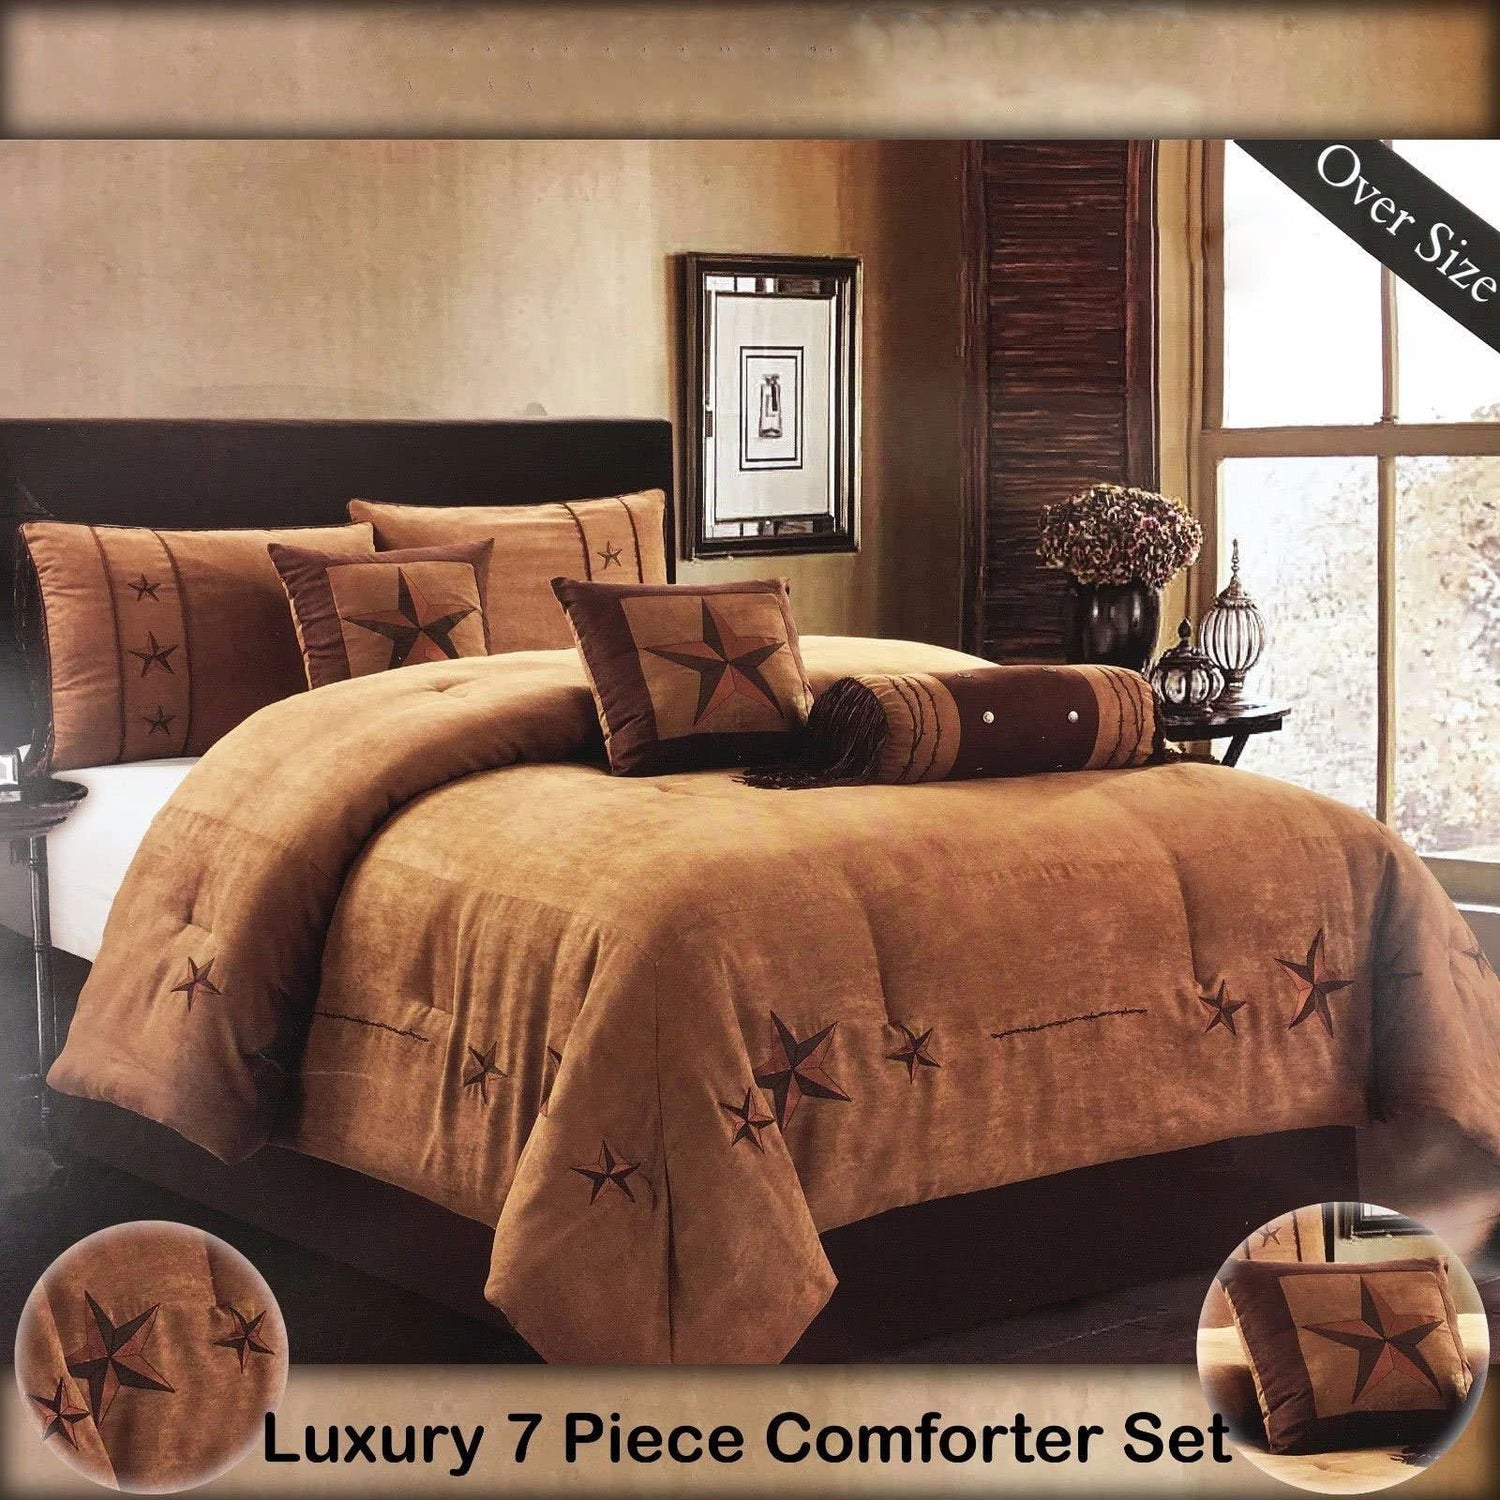 7 Piece Comforter Sets